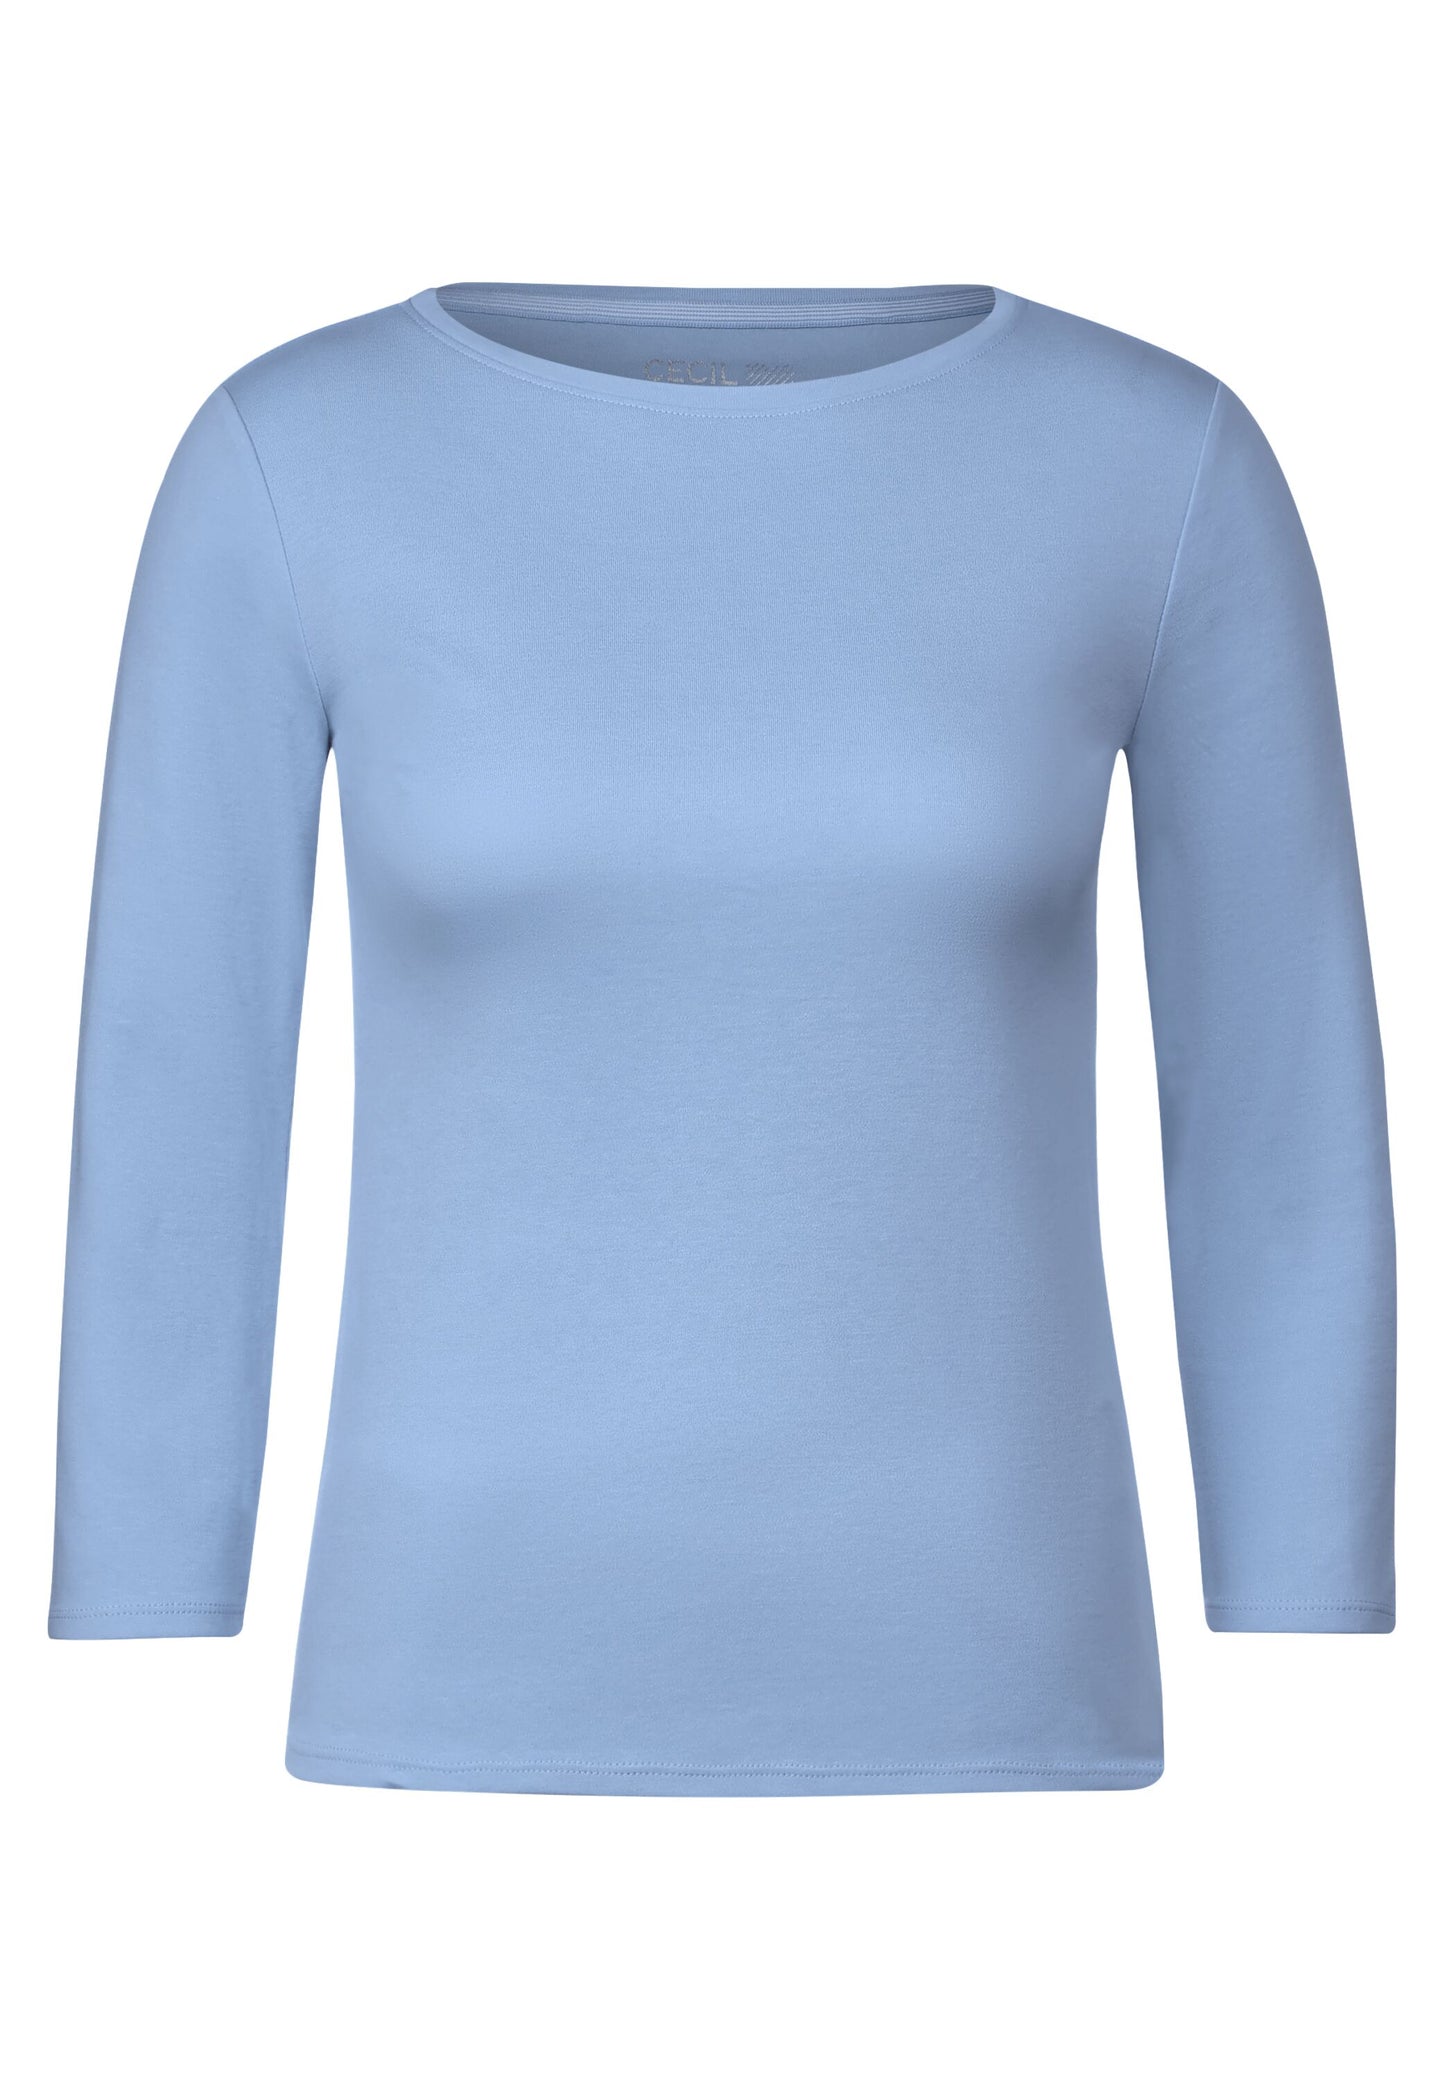 CECIL - Basic Shirt in Unifarbe - blau